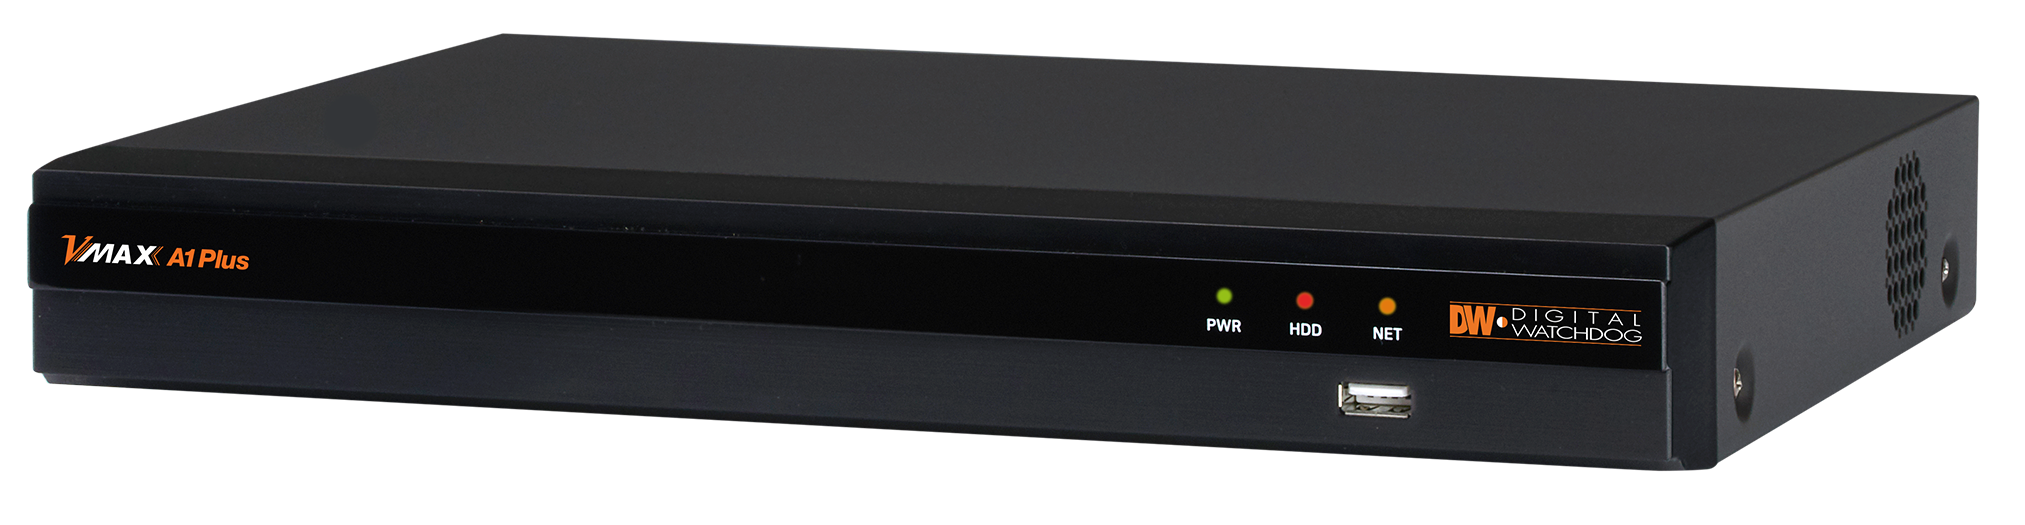 Digital Watchdog DW-VA1P82T  UHDoC - DVR 8ch 8 Channel Universal HD Over Coax DVR